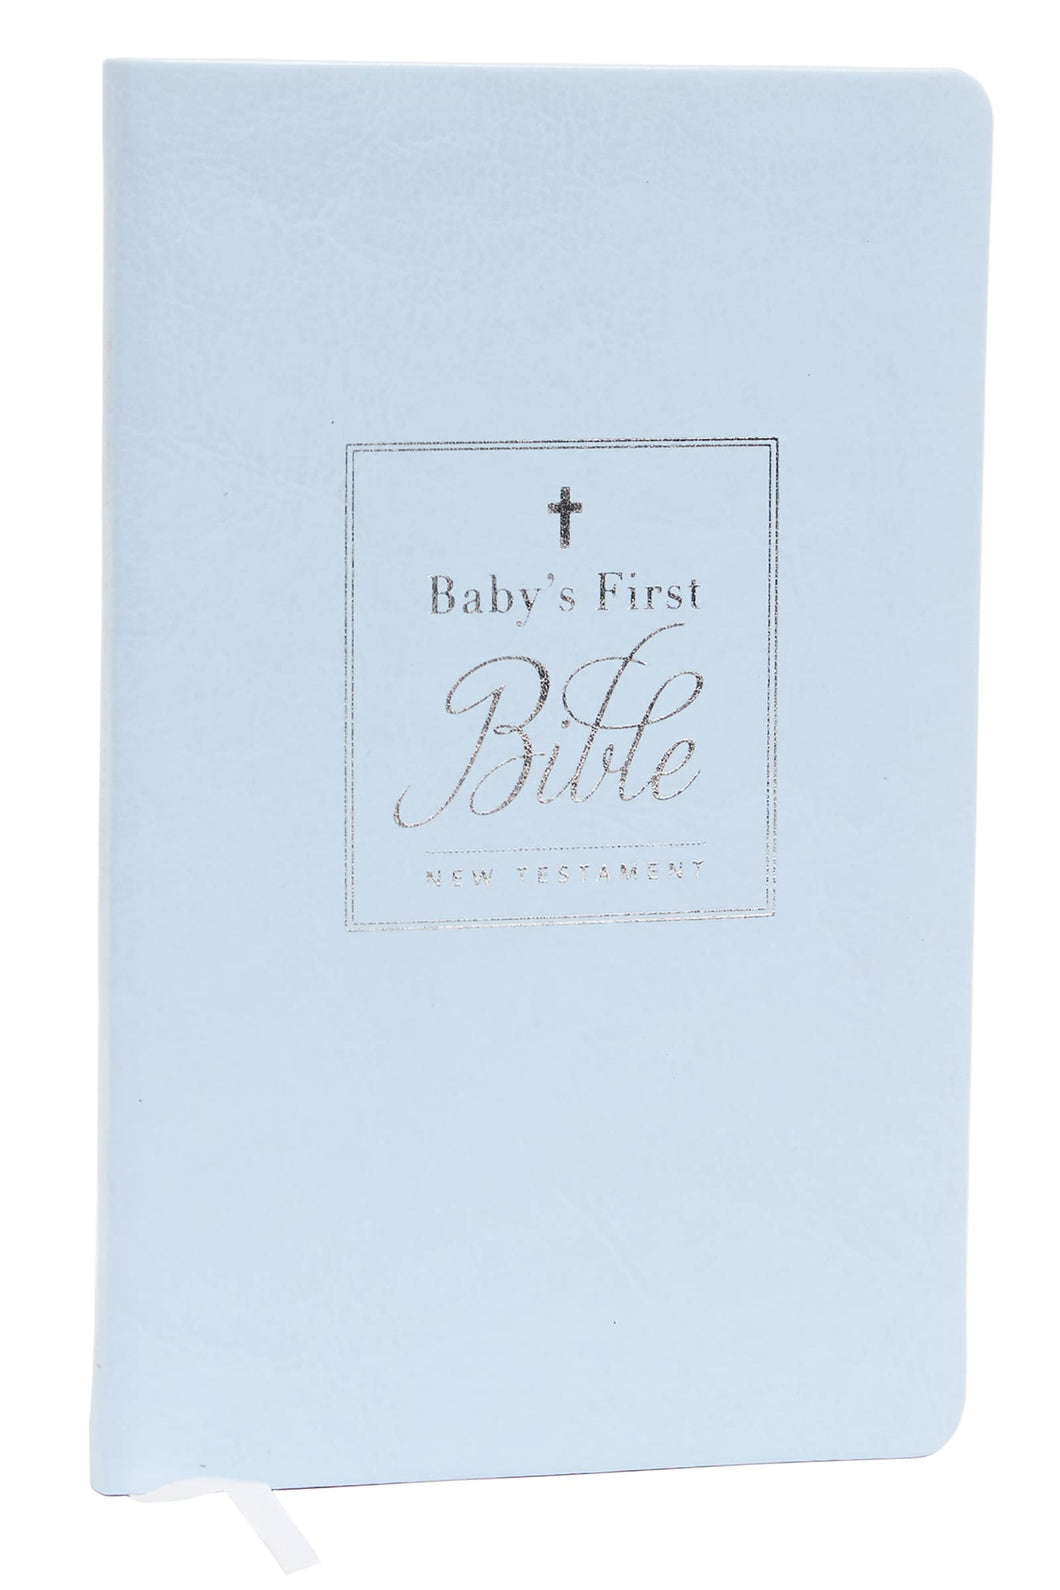 KJV Baby's First New Testament - Blue